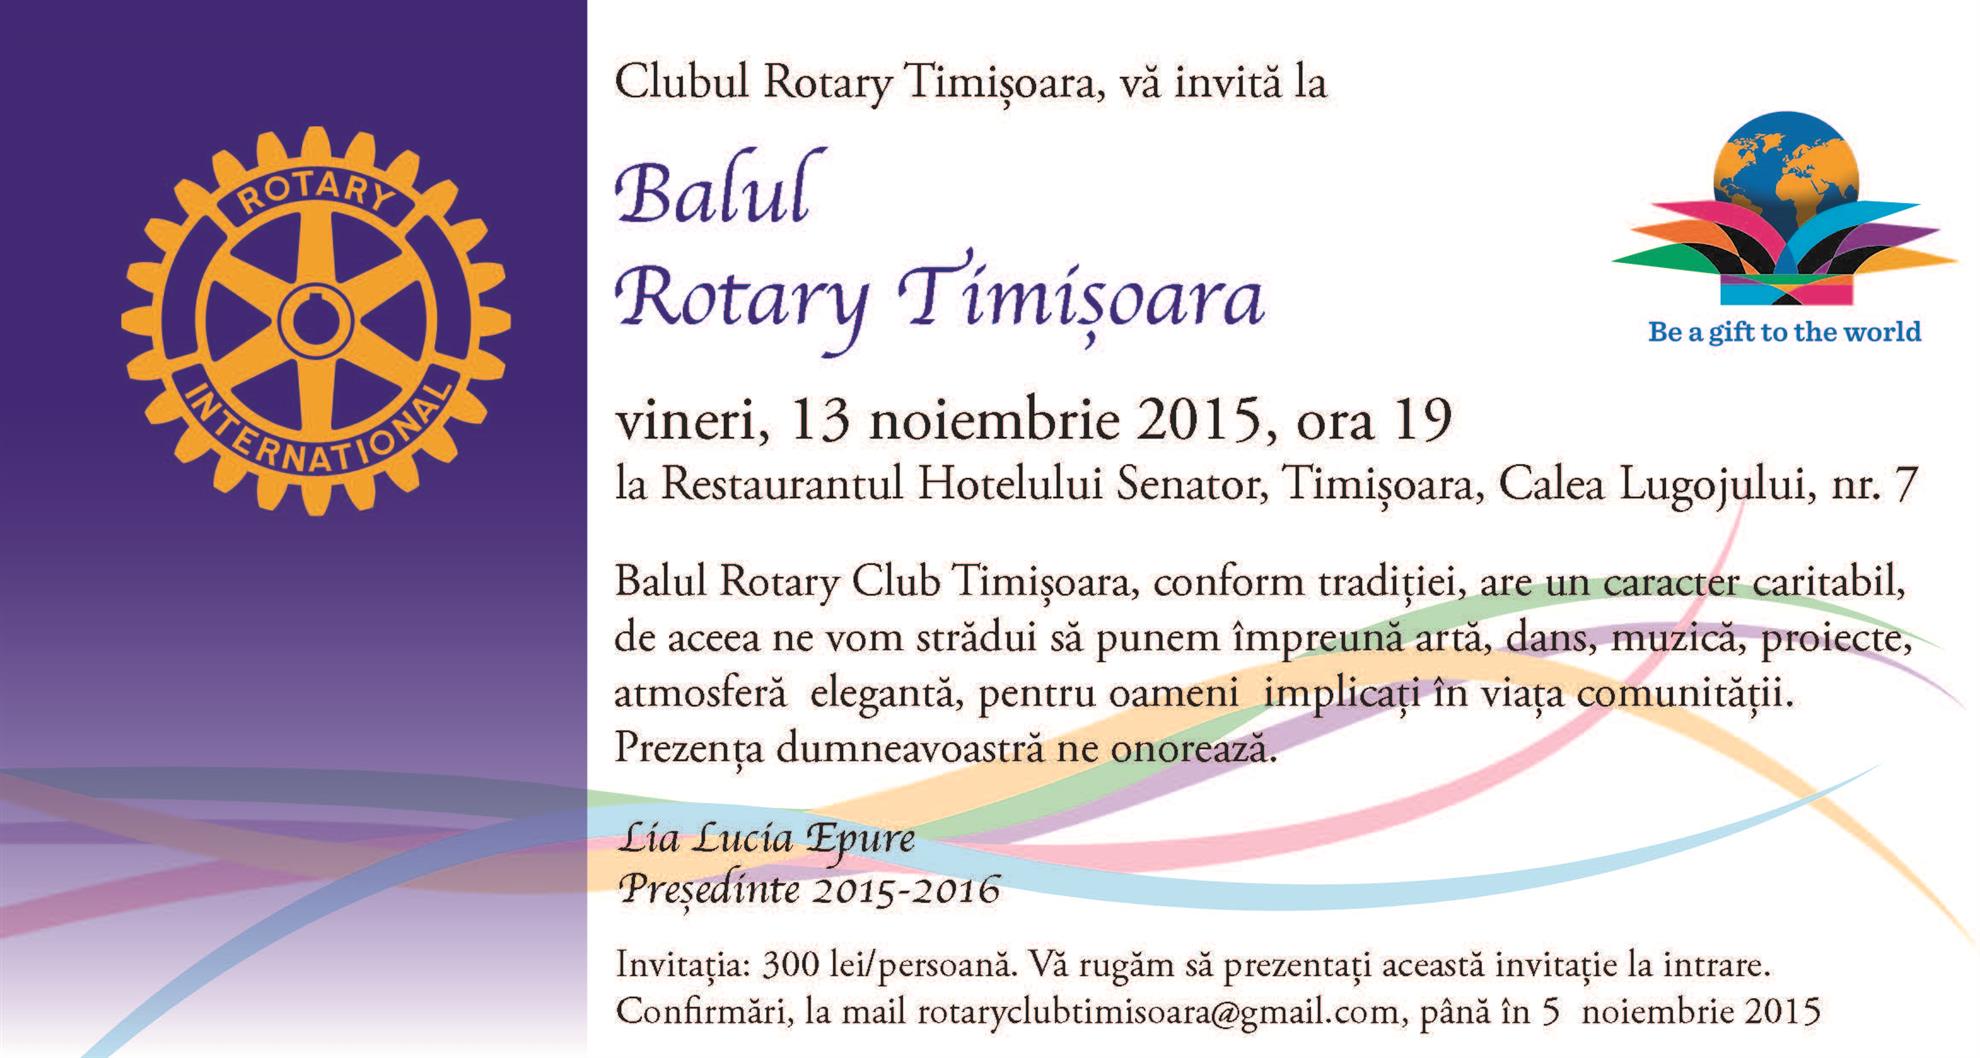 Balul Rotary Club Timisoara District 2241